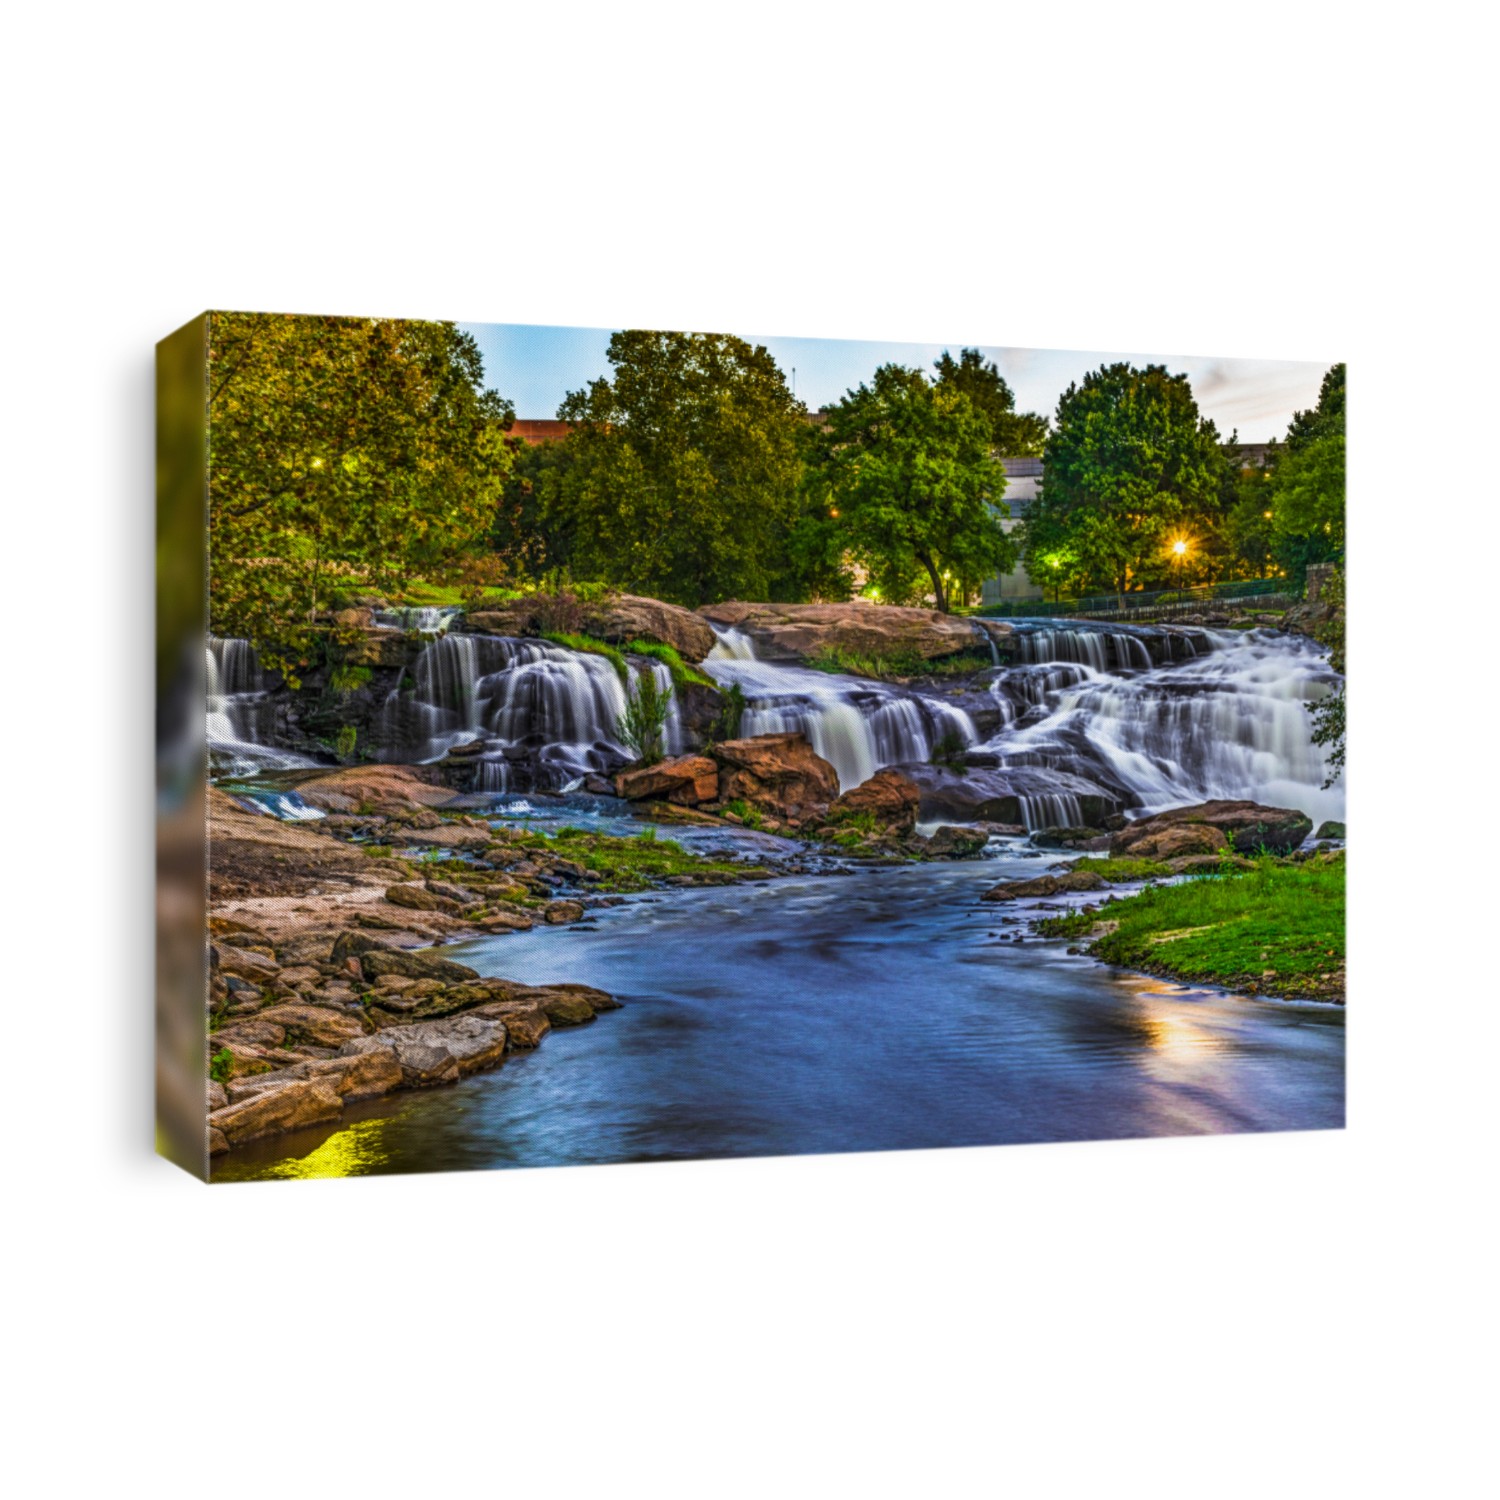 Reedy River Falls in Downtown Greenville South Carolina SC.